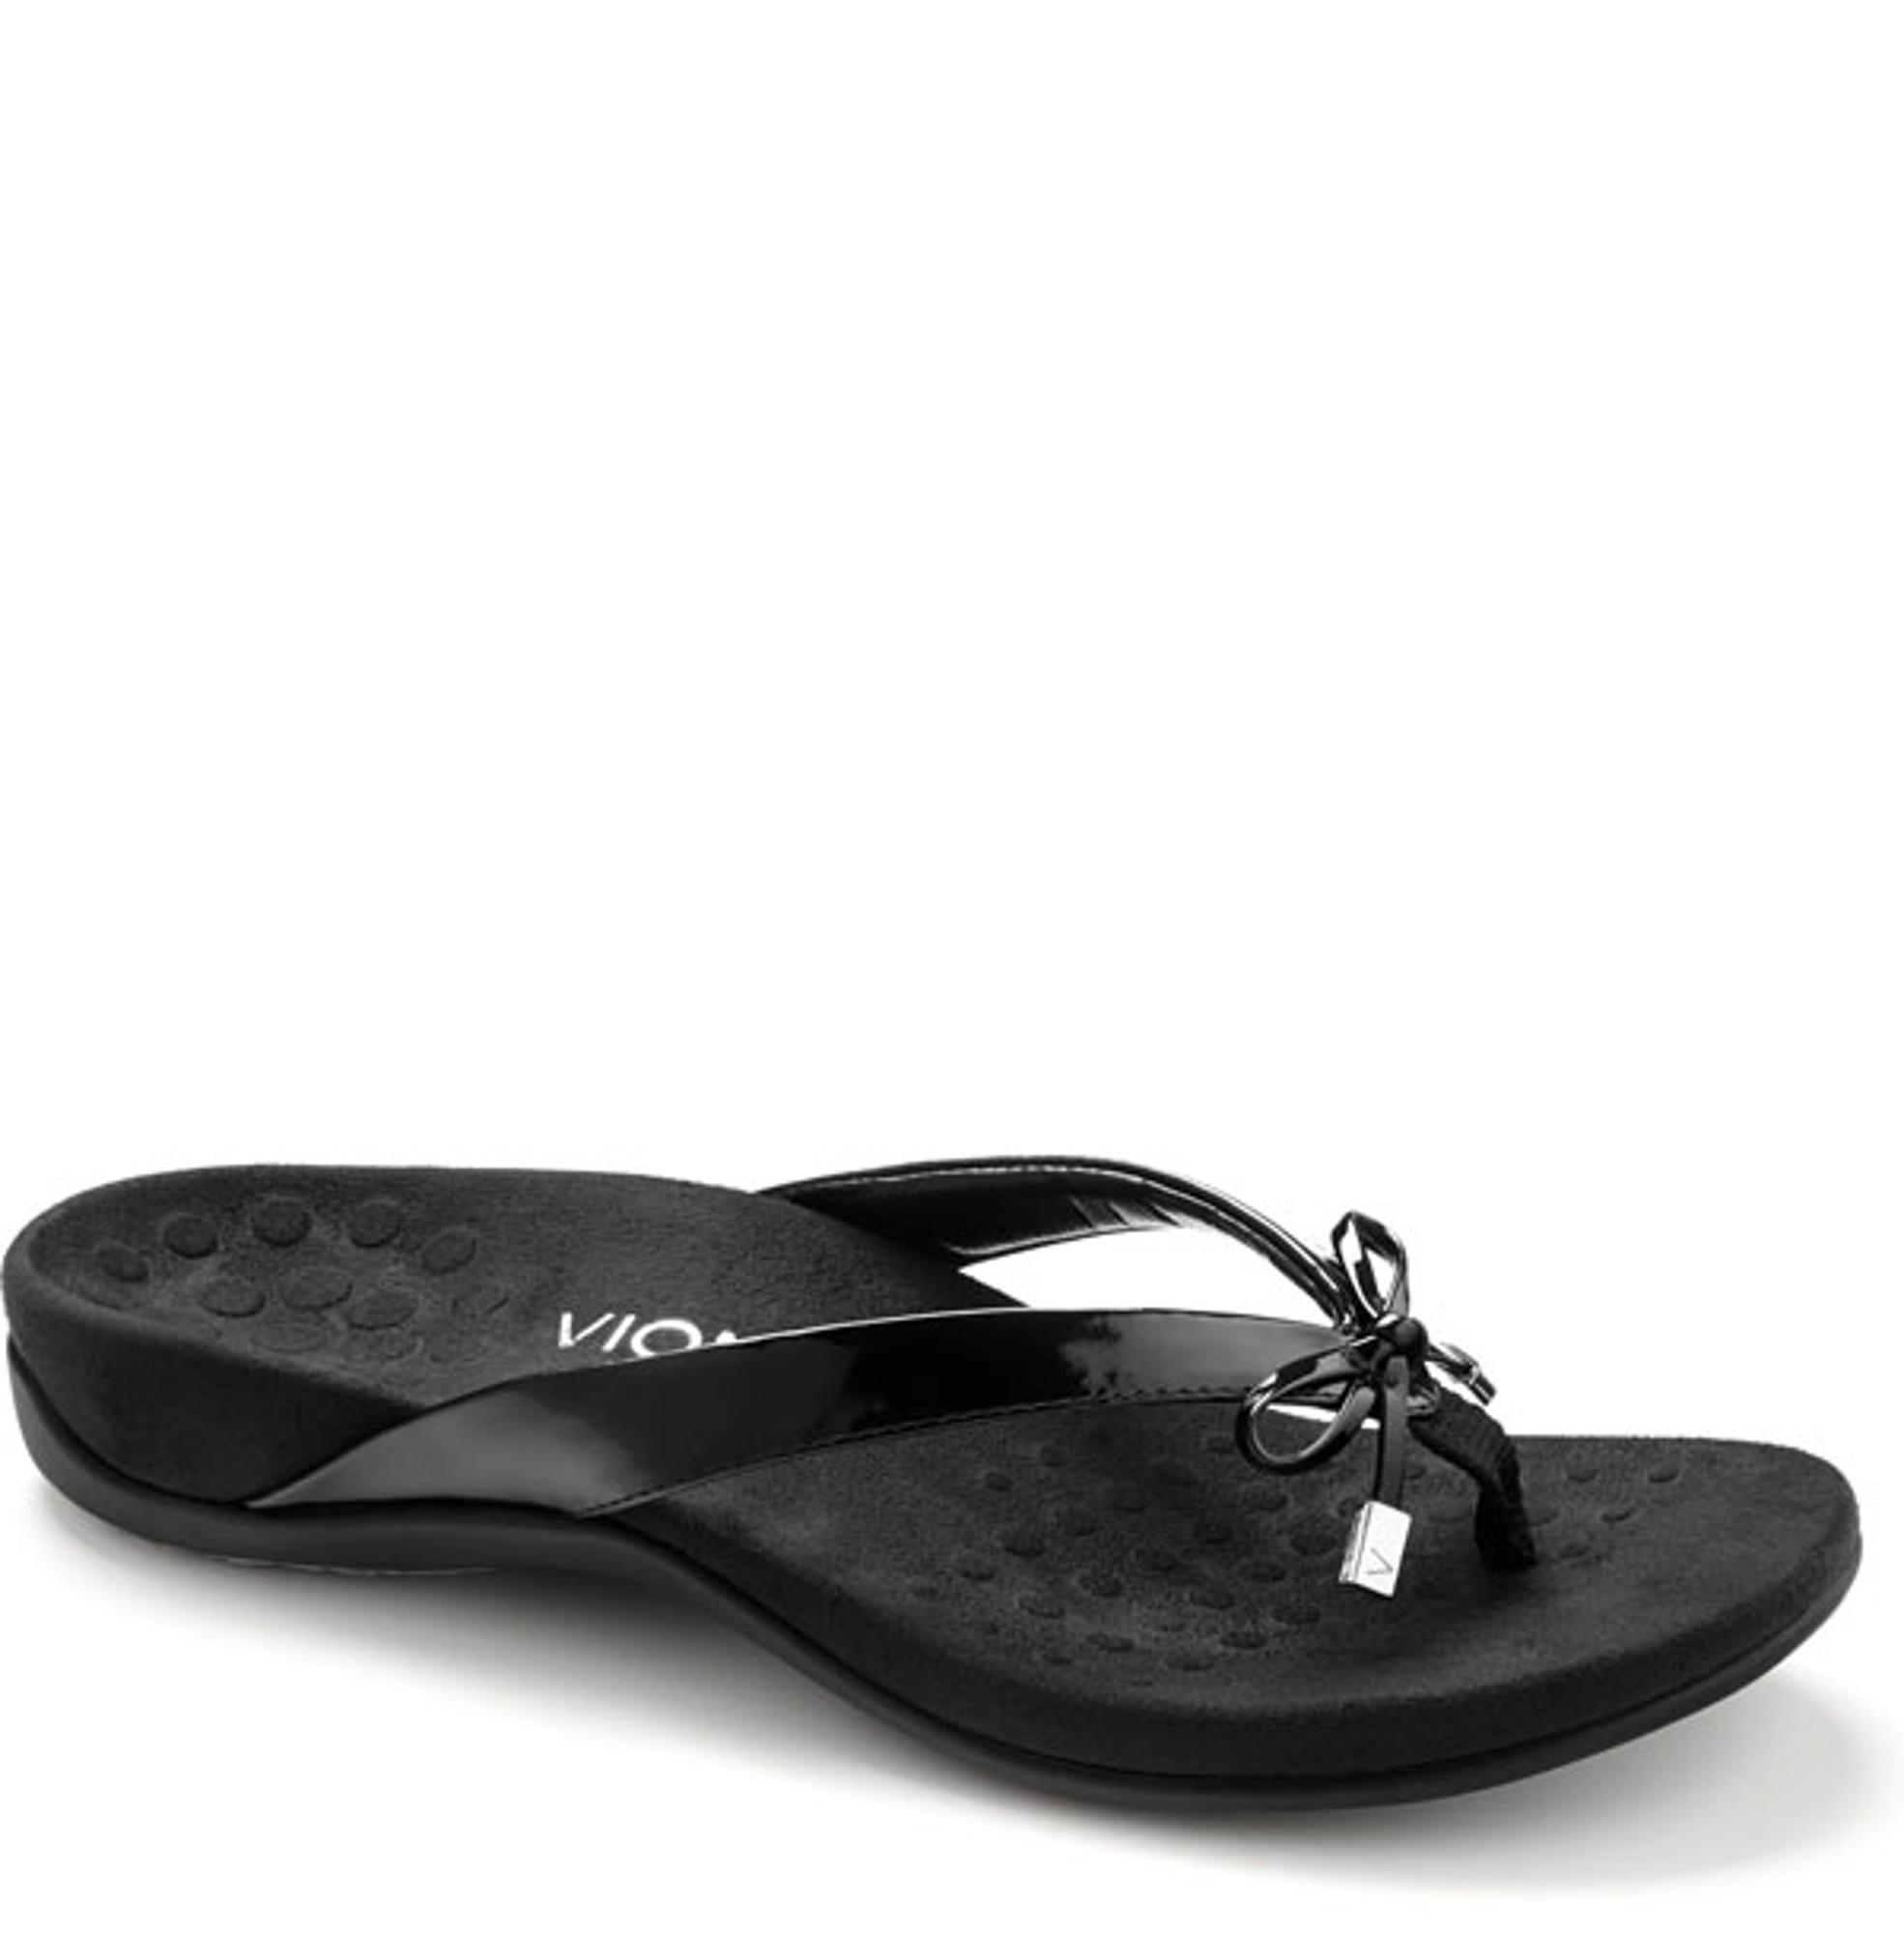 Womens BELLA II sandal / Black patent 